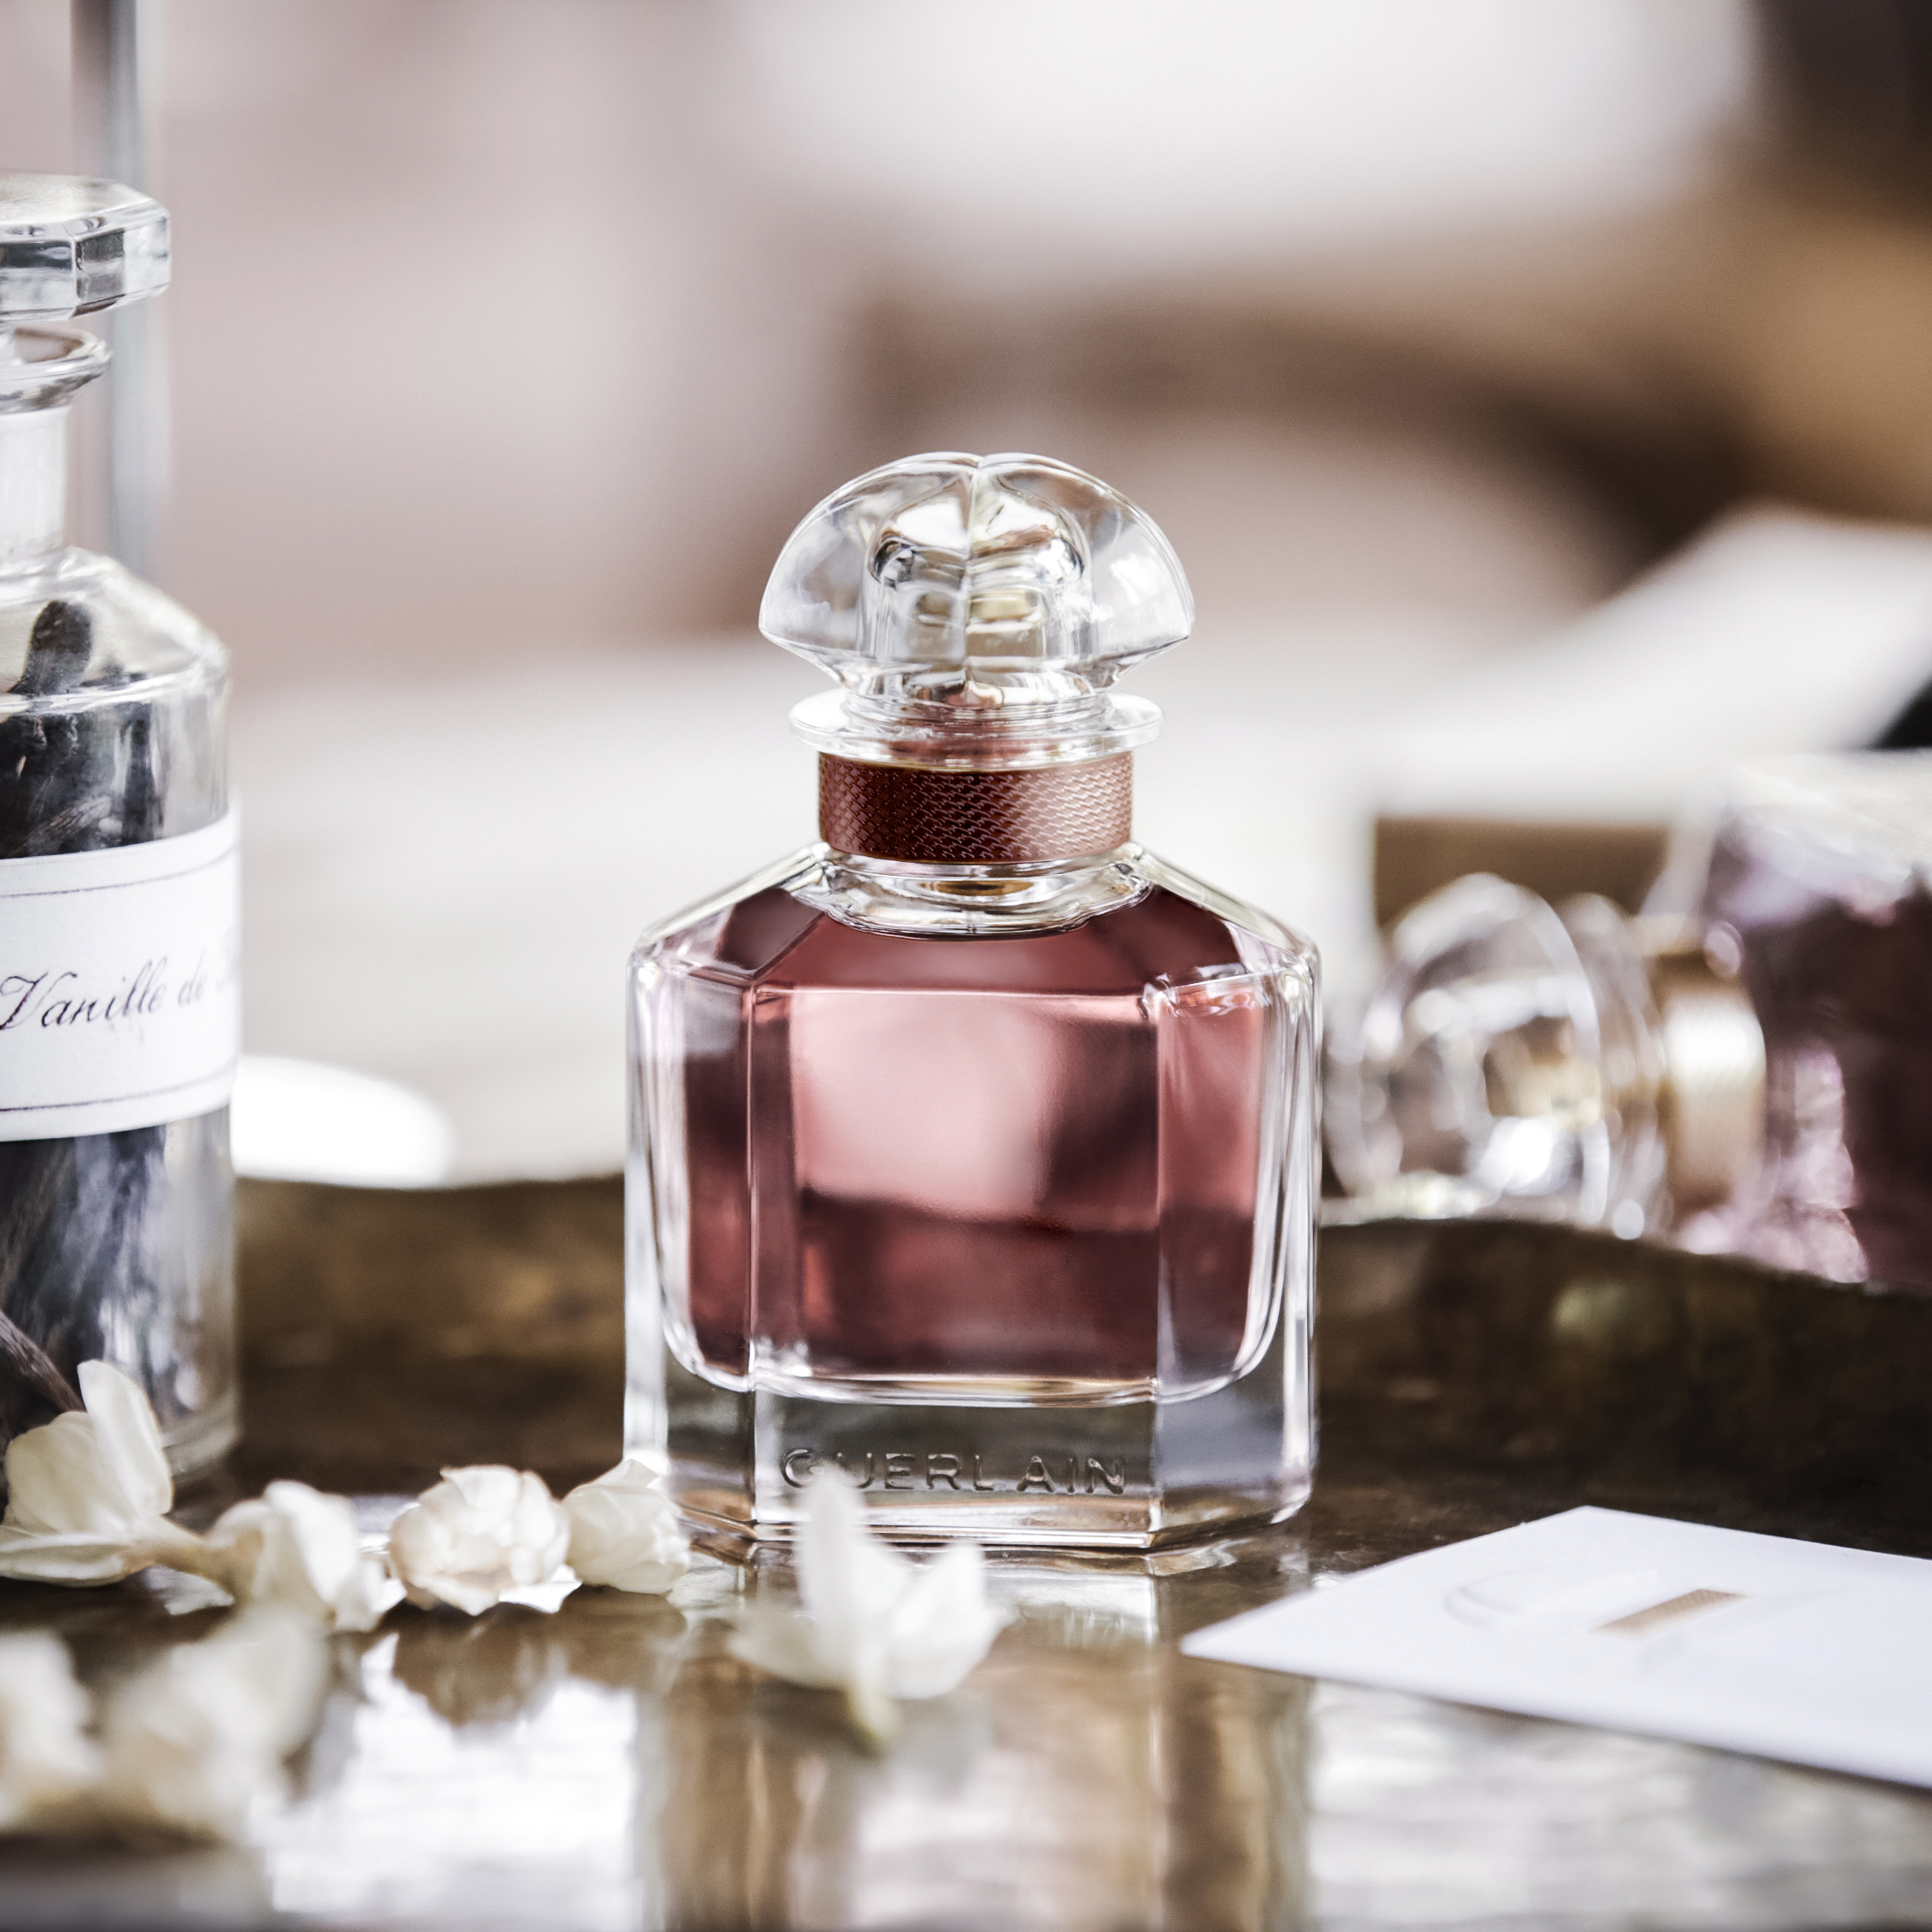 Guerlain Mon Guerlain Intense: A Review ~ Fragrance Reviews